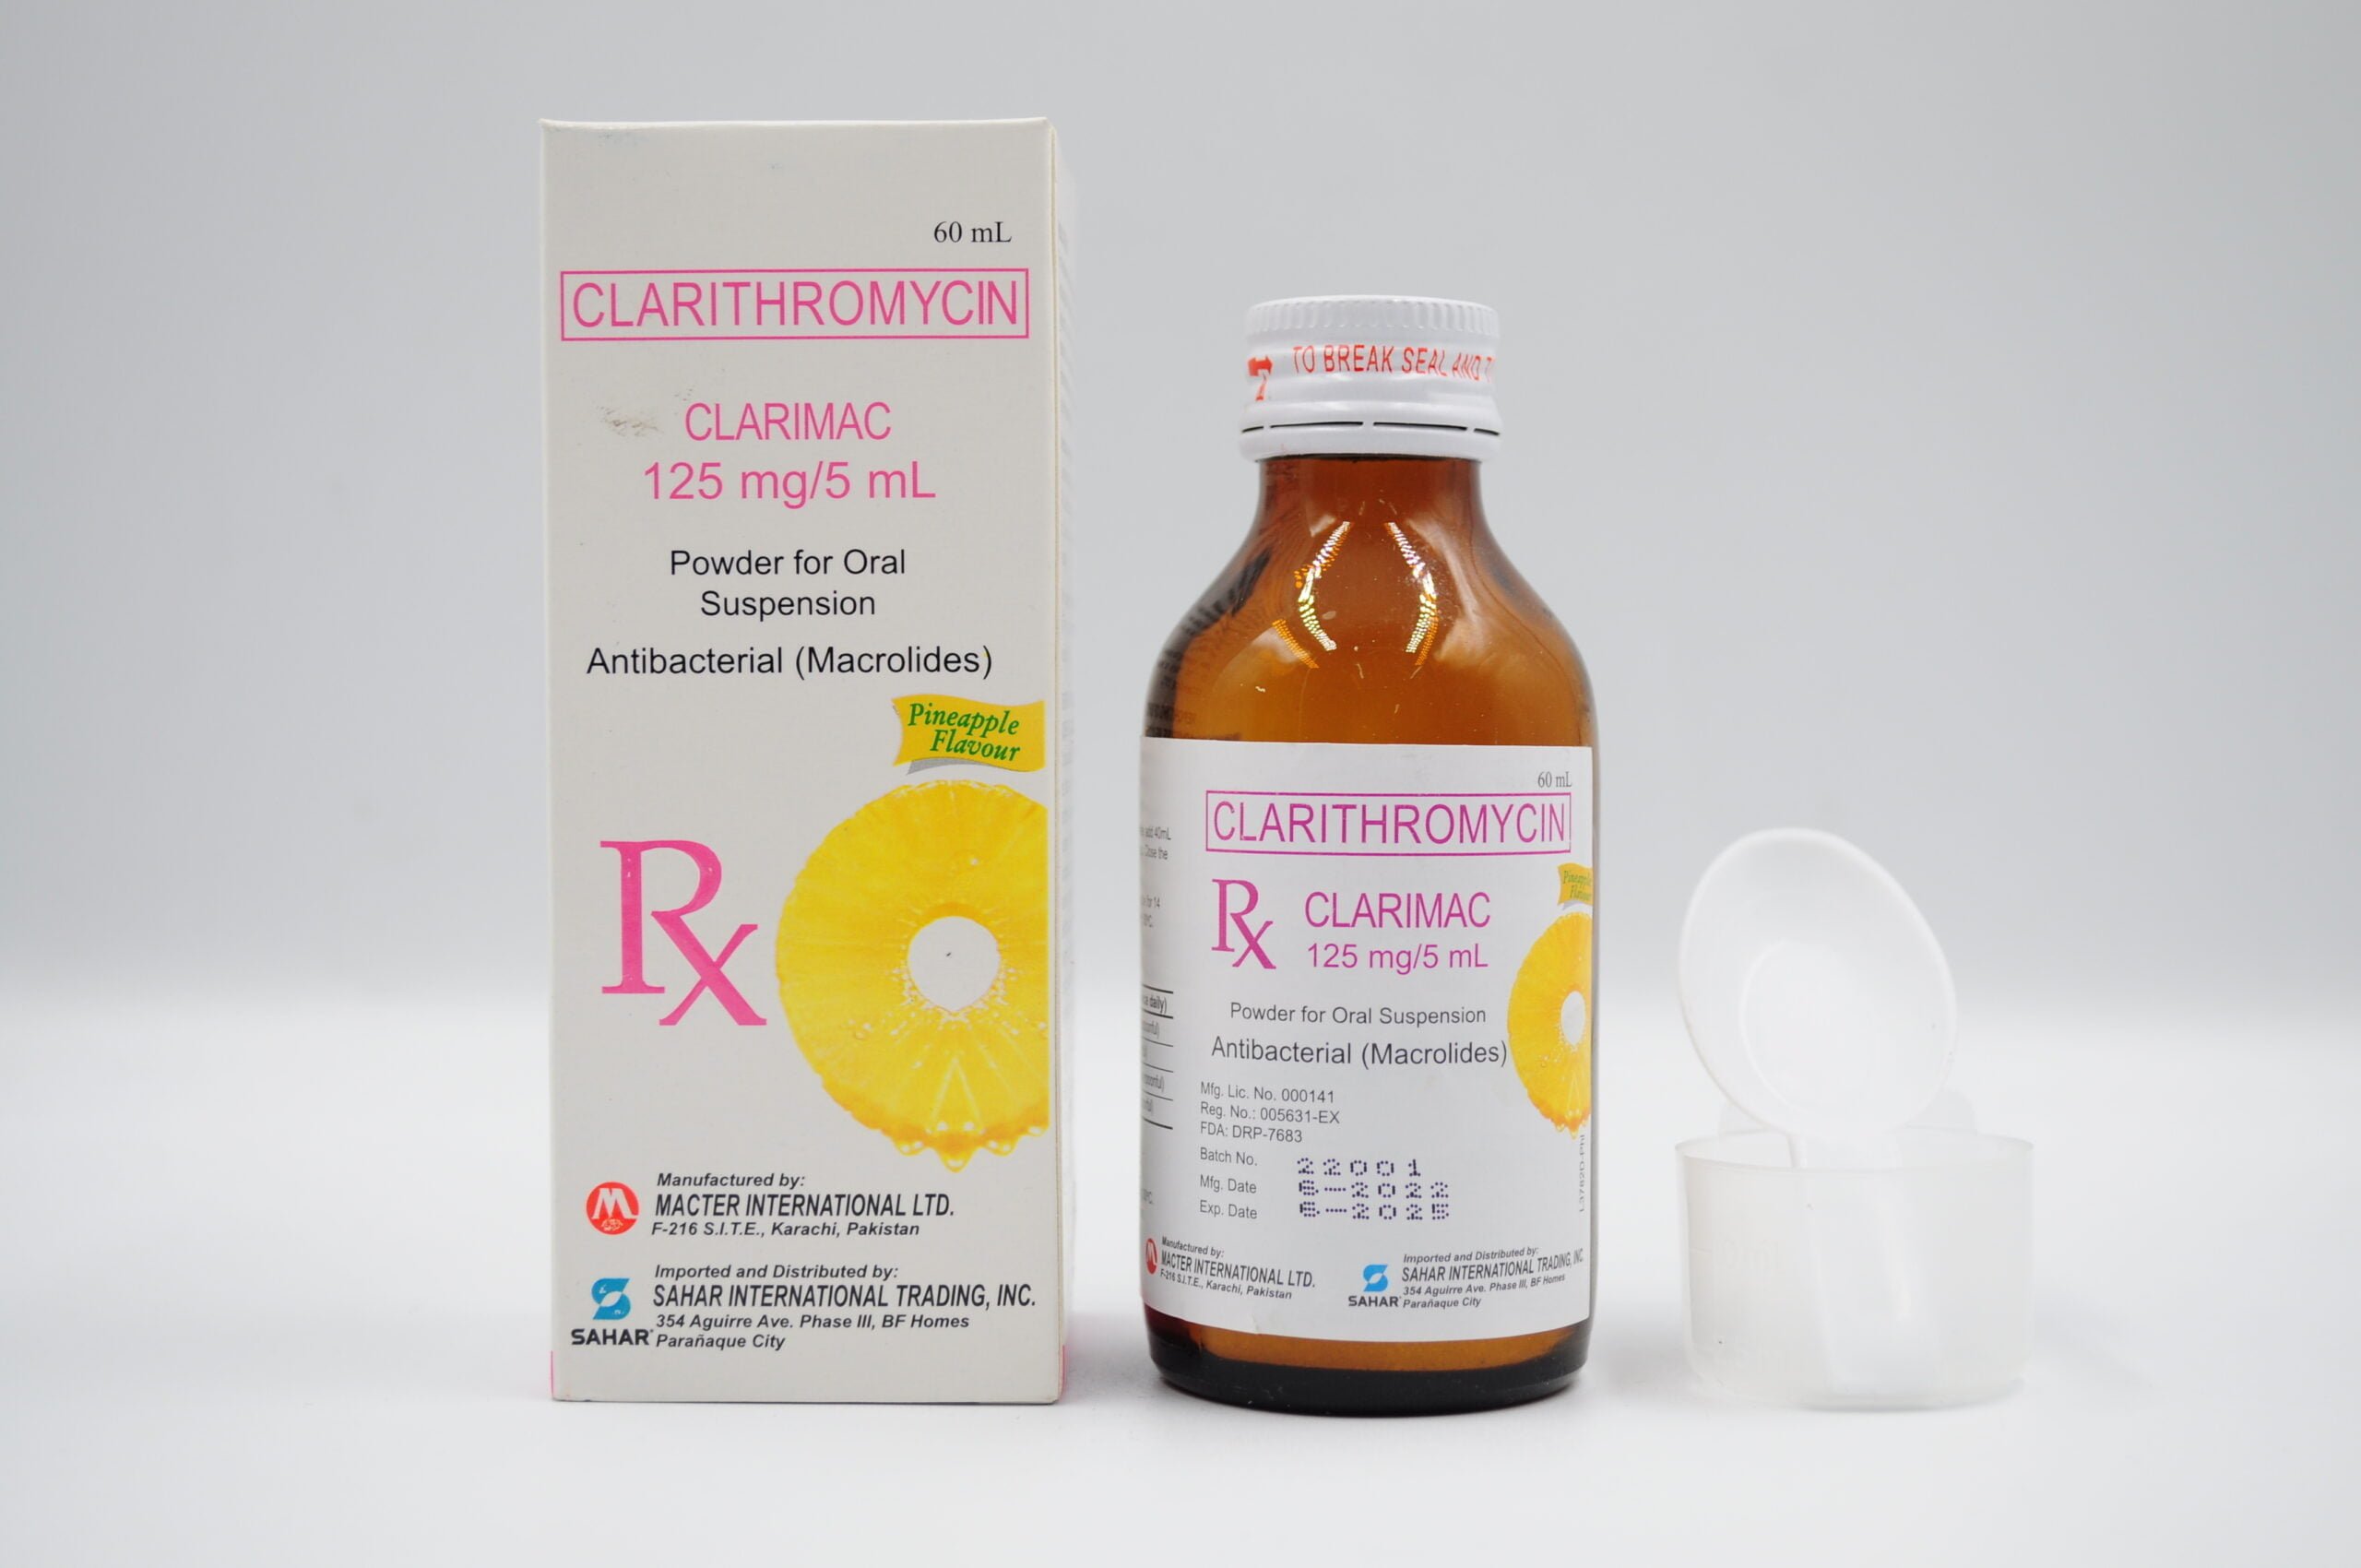 Clarithromycin (Clarimac) 125 mg/5 mL